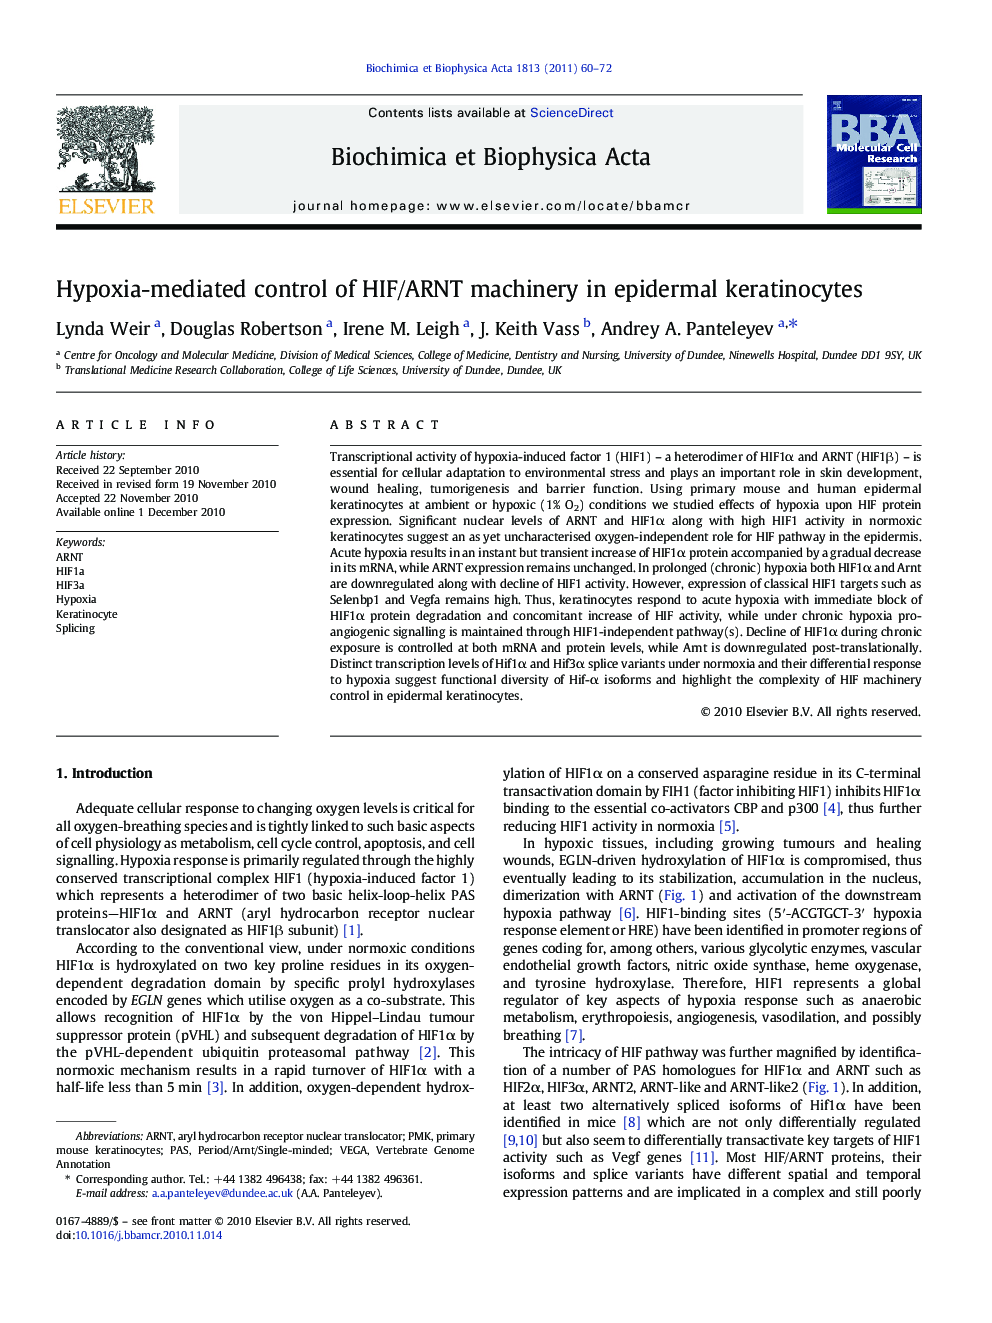 Hypoxia-mediated control of HIF/ARNT machinery in epidermal keratinocytes